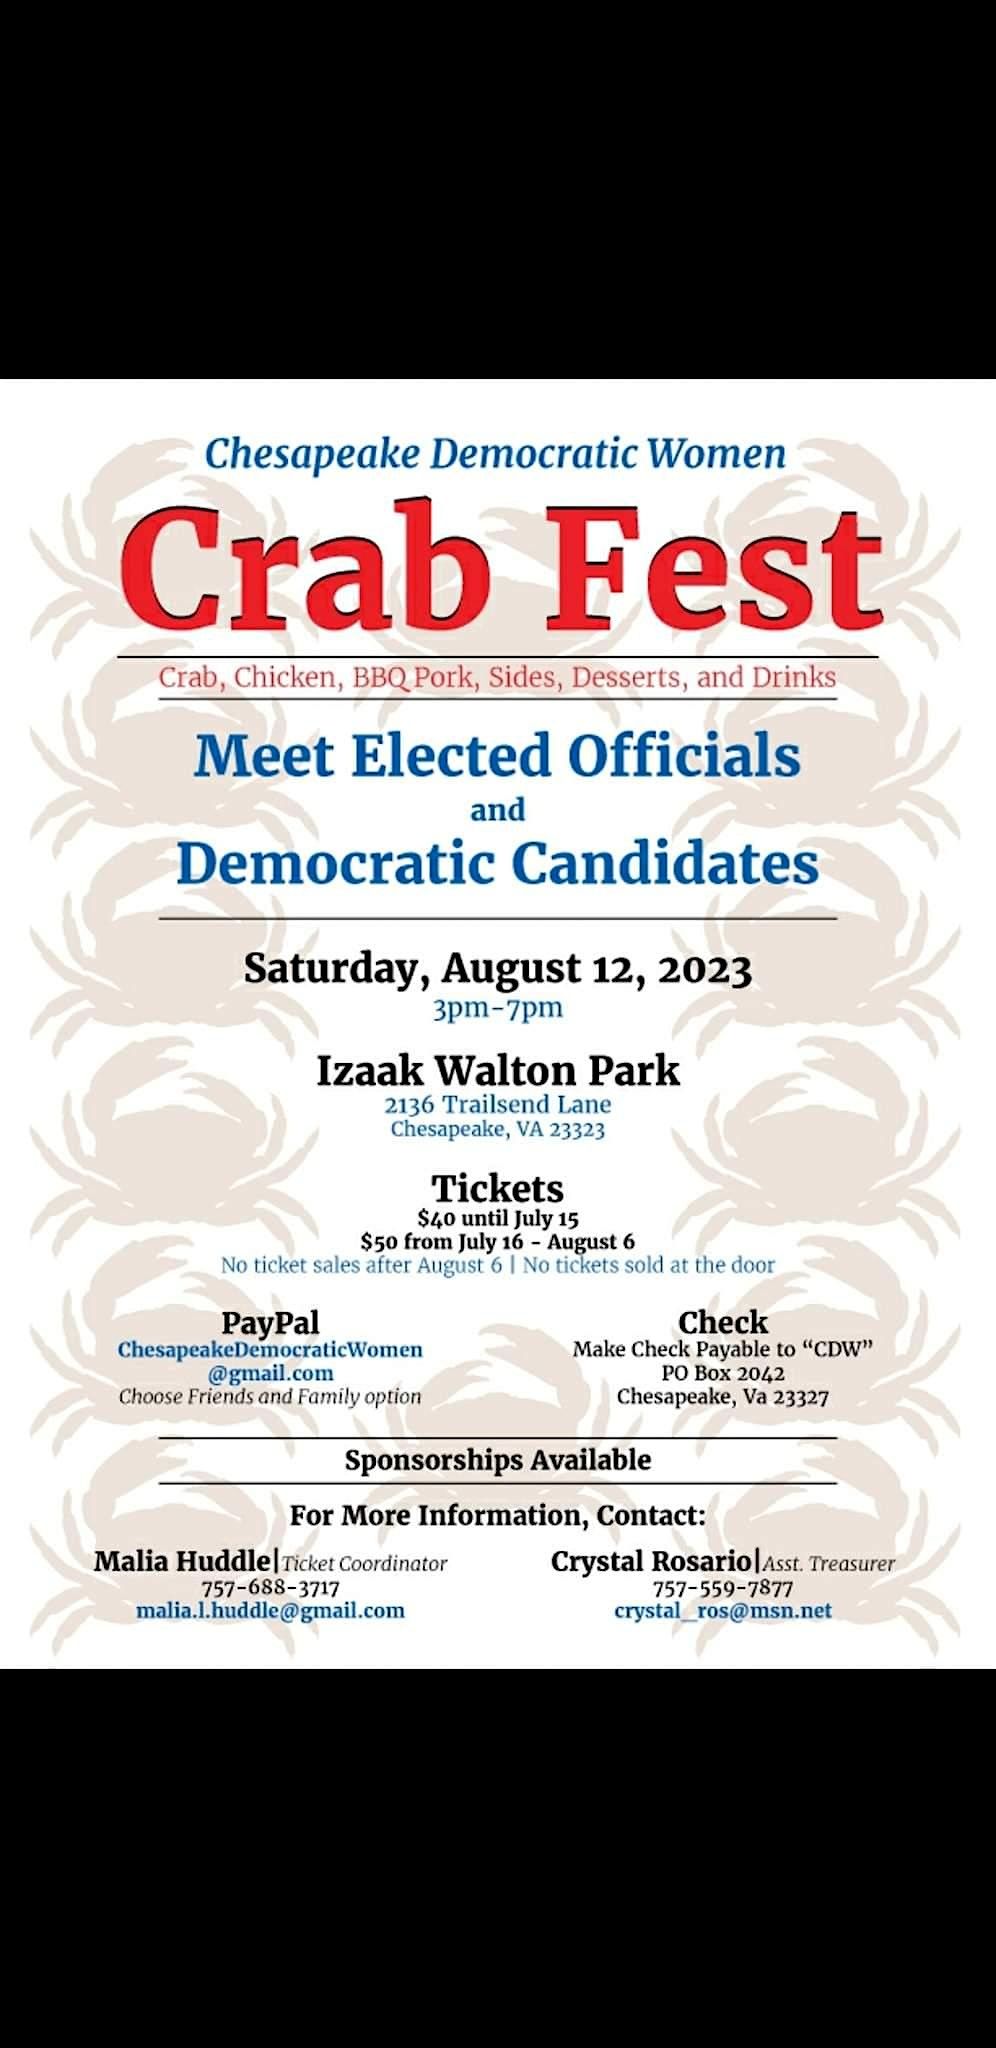 Chesapeake Democratic Women Crab Fest